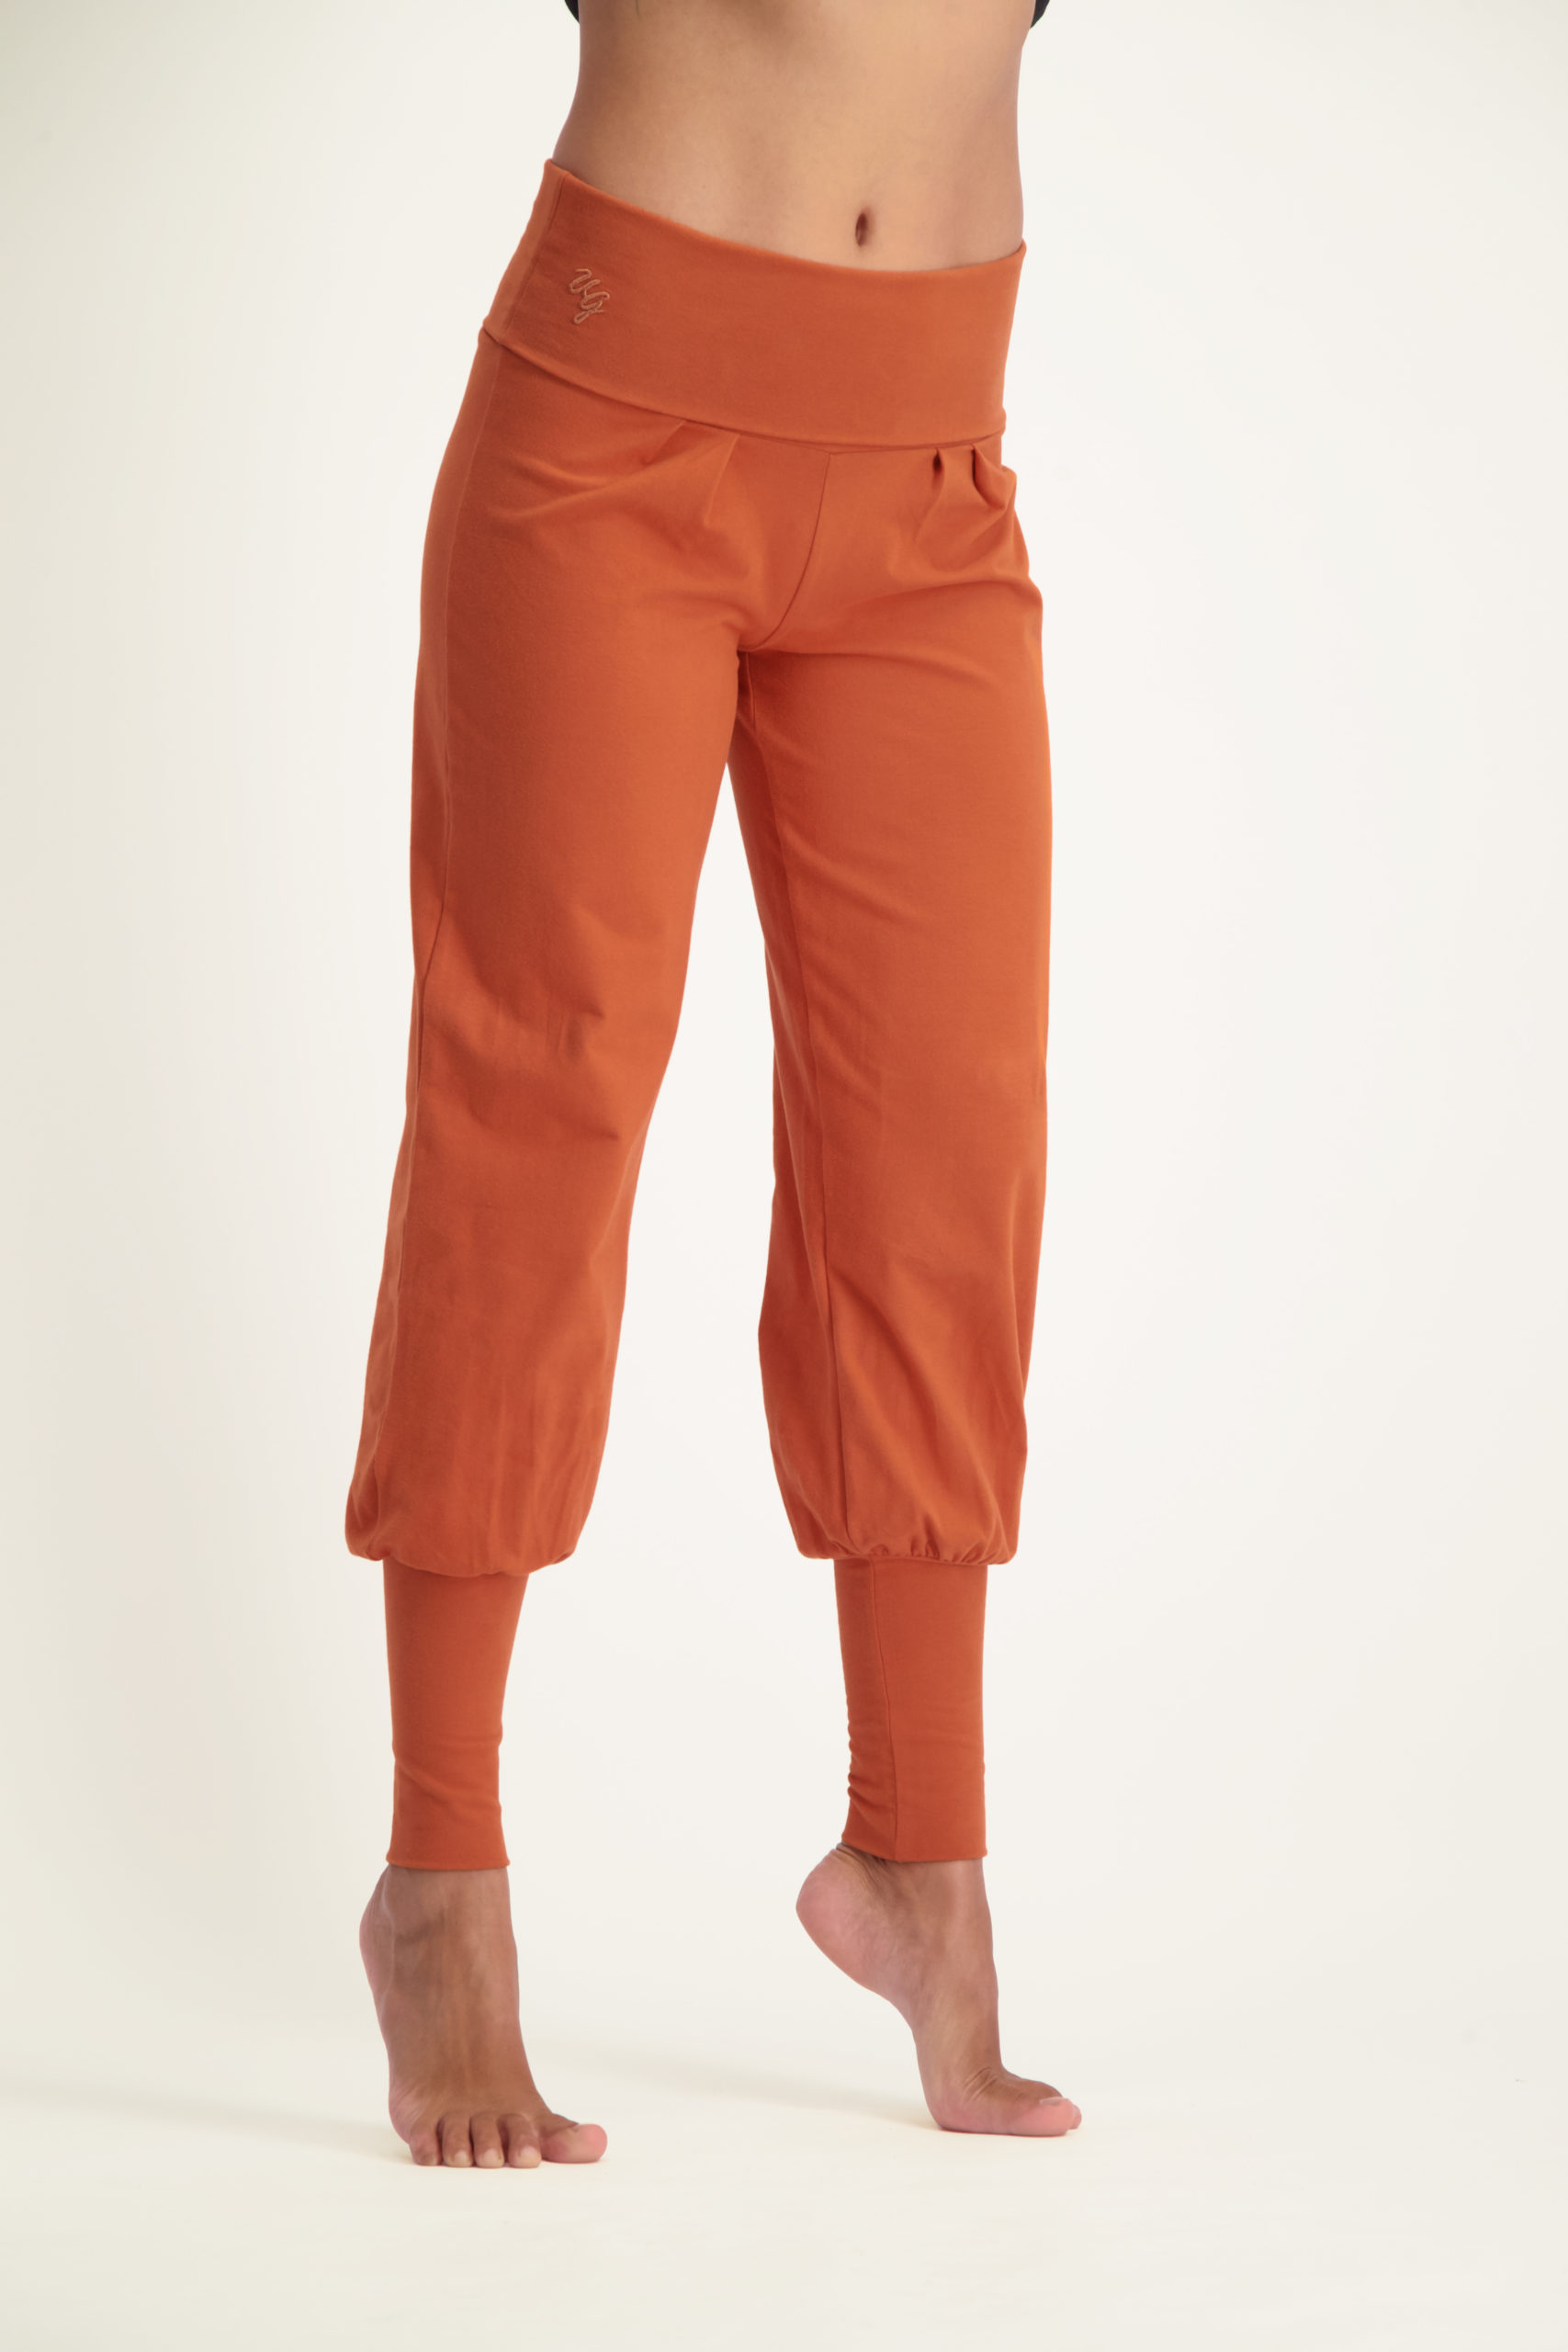 Devi pants-Bombay brown-11265539-front-model_Fullbody_TIFF_2